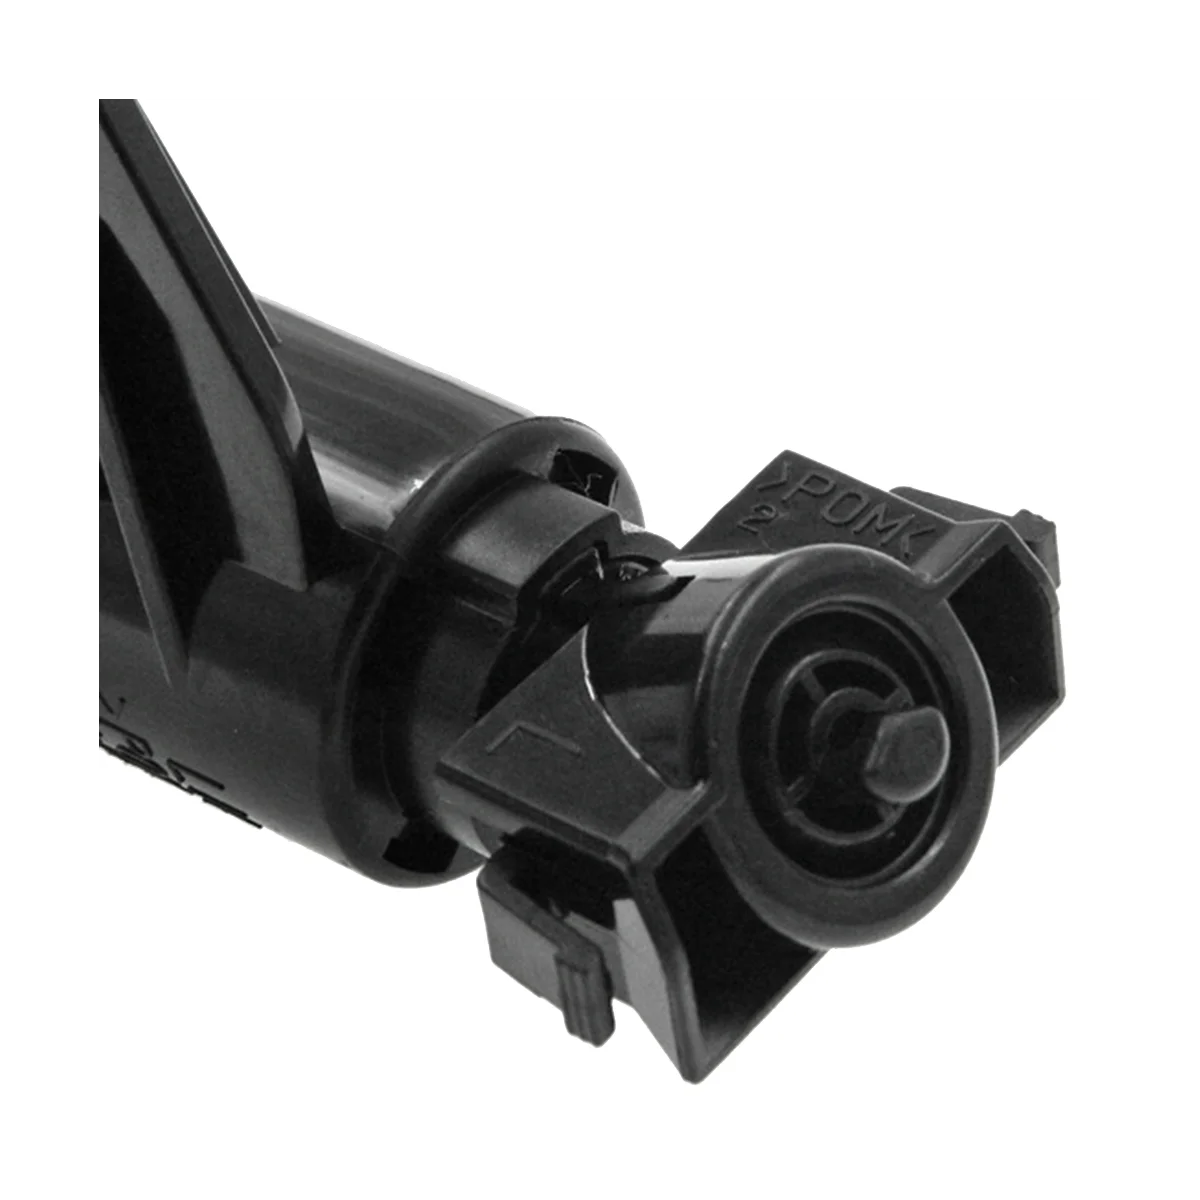 

98671-F1000 Left Front Headlight Washer Nozzle for KIA Sportage KX5 2016-2018 Car Water Spray Jet Telescopic Nozzle